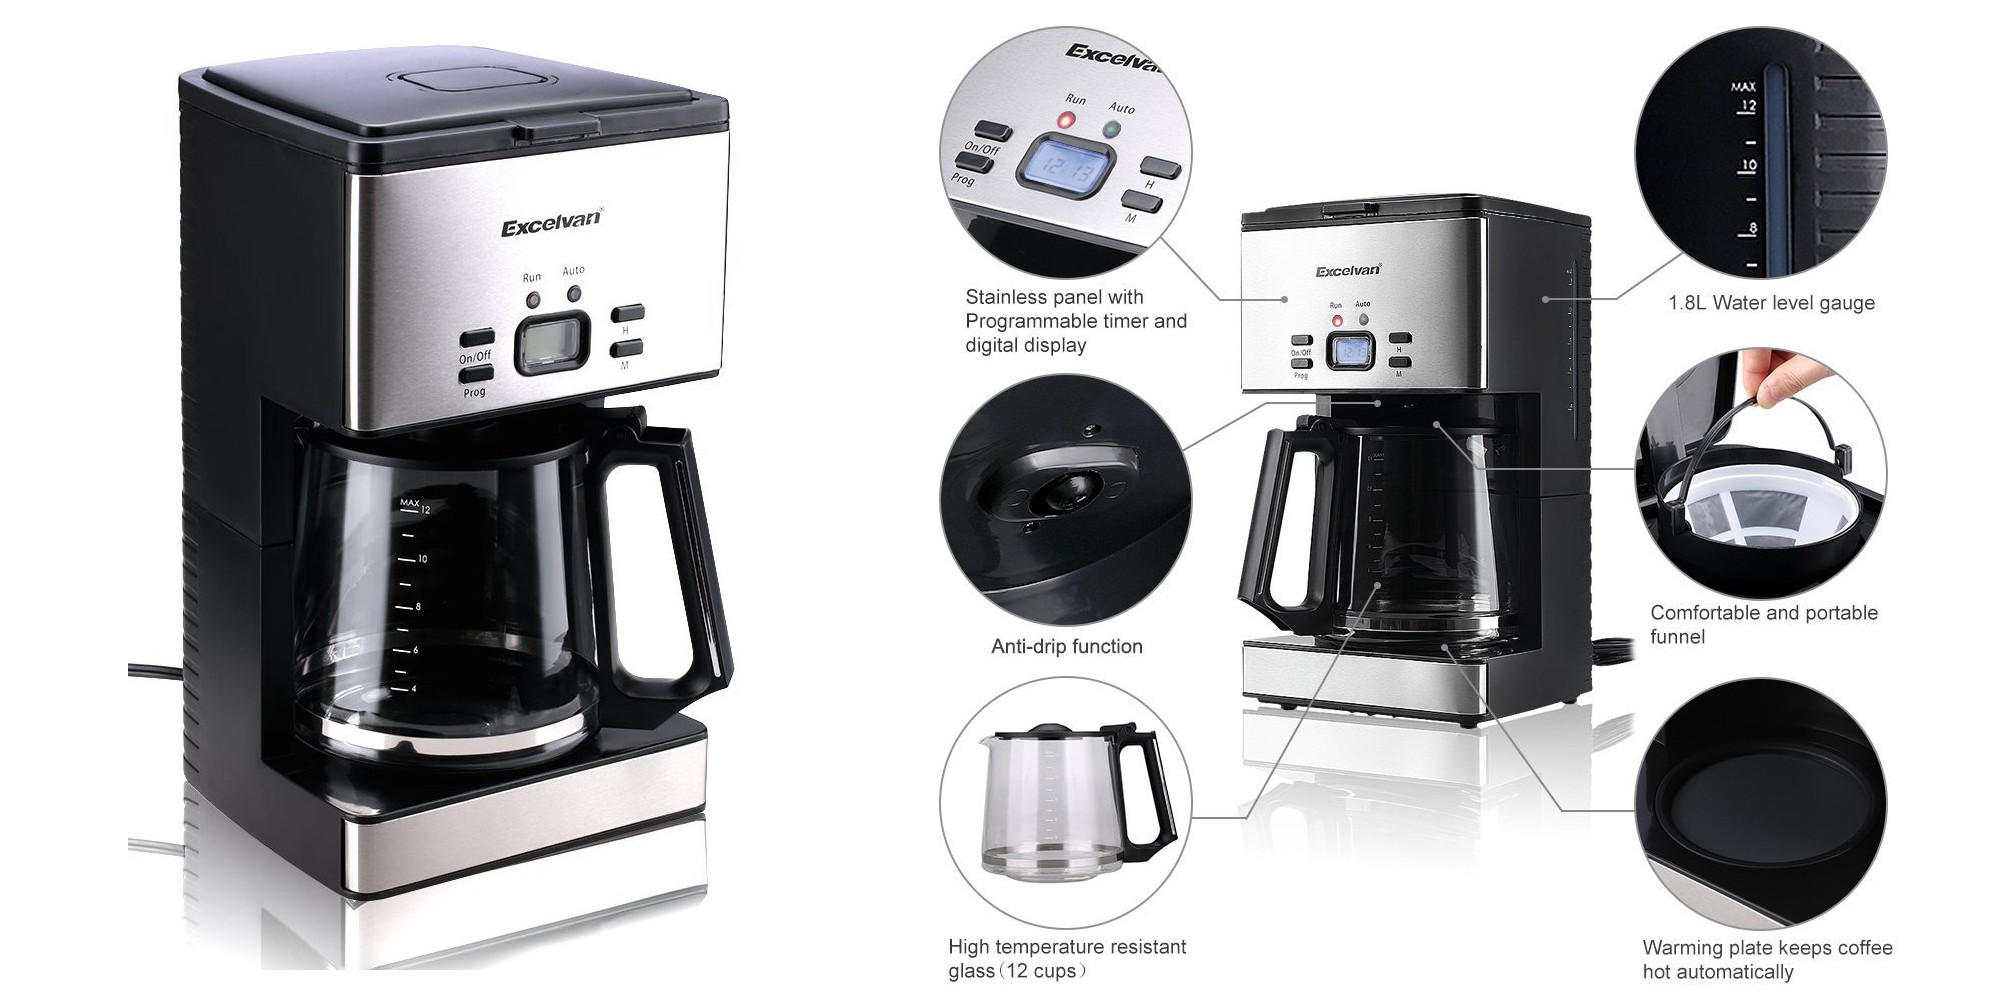 excelvan-1000w-stainless-steel-coffee-machine-programmable-digital-coffeemaker-4